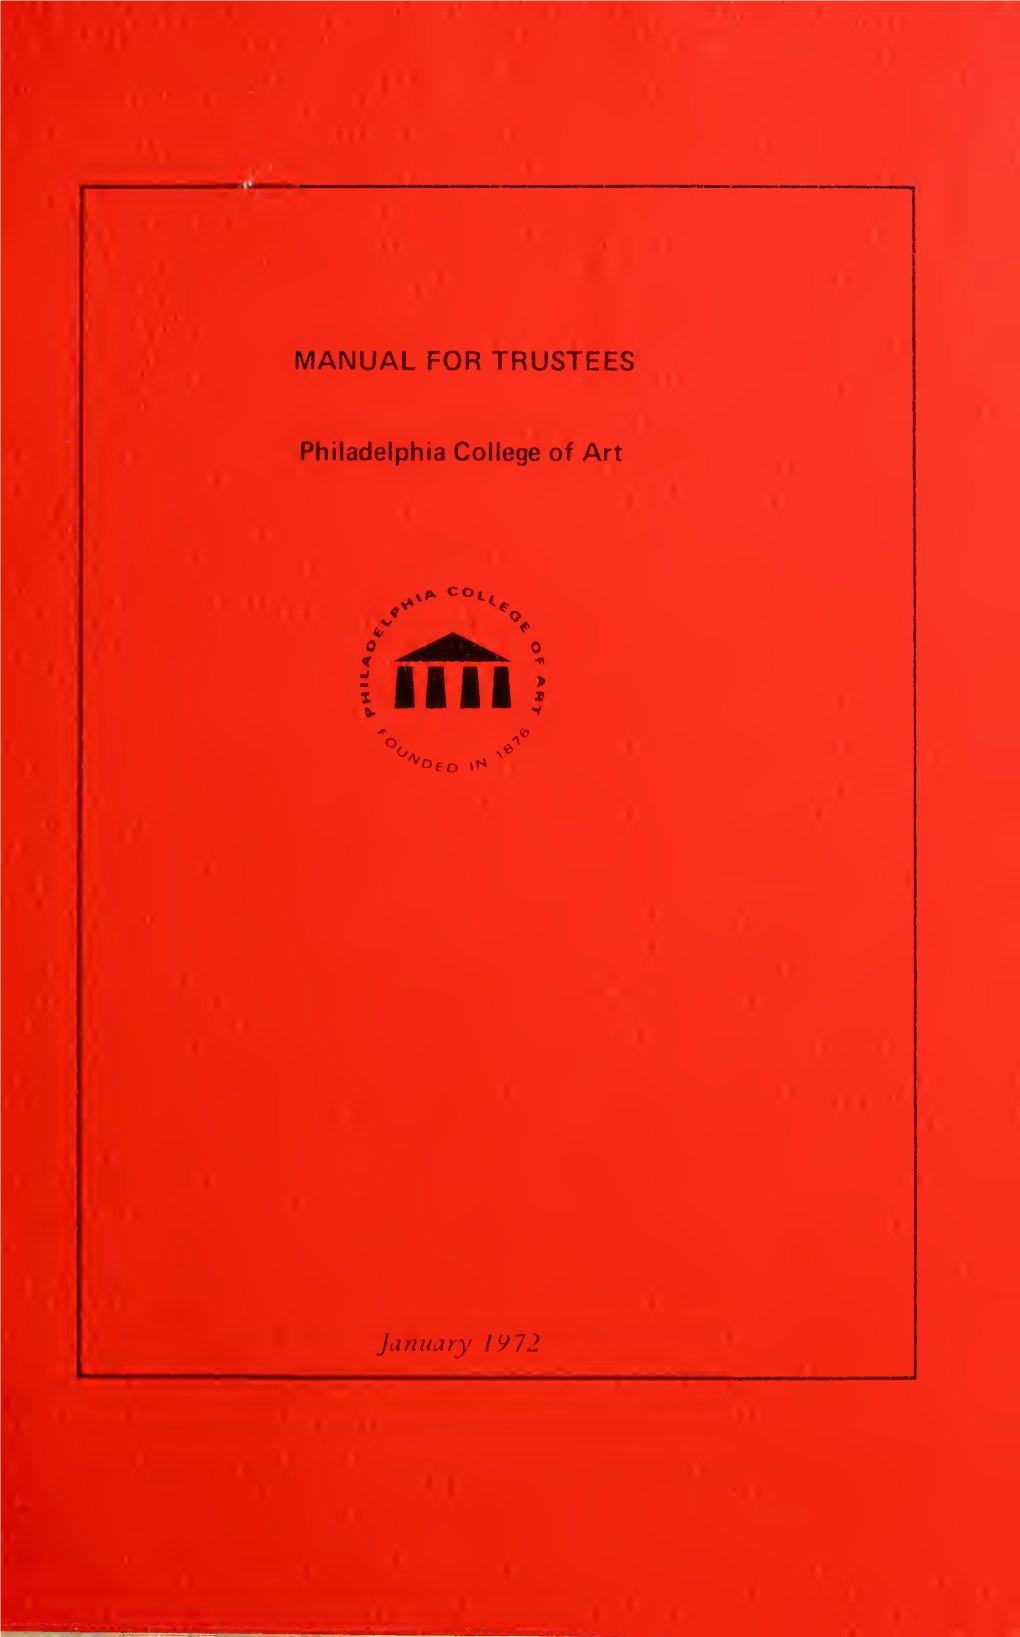 Manual for Trustees. Philadelphia College of Art. January 1972